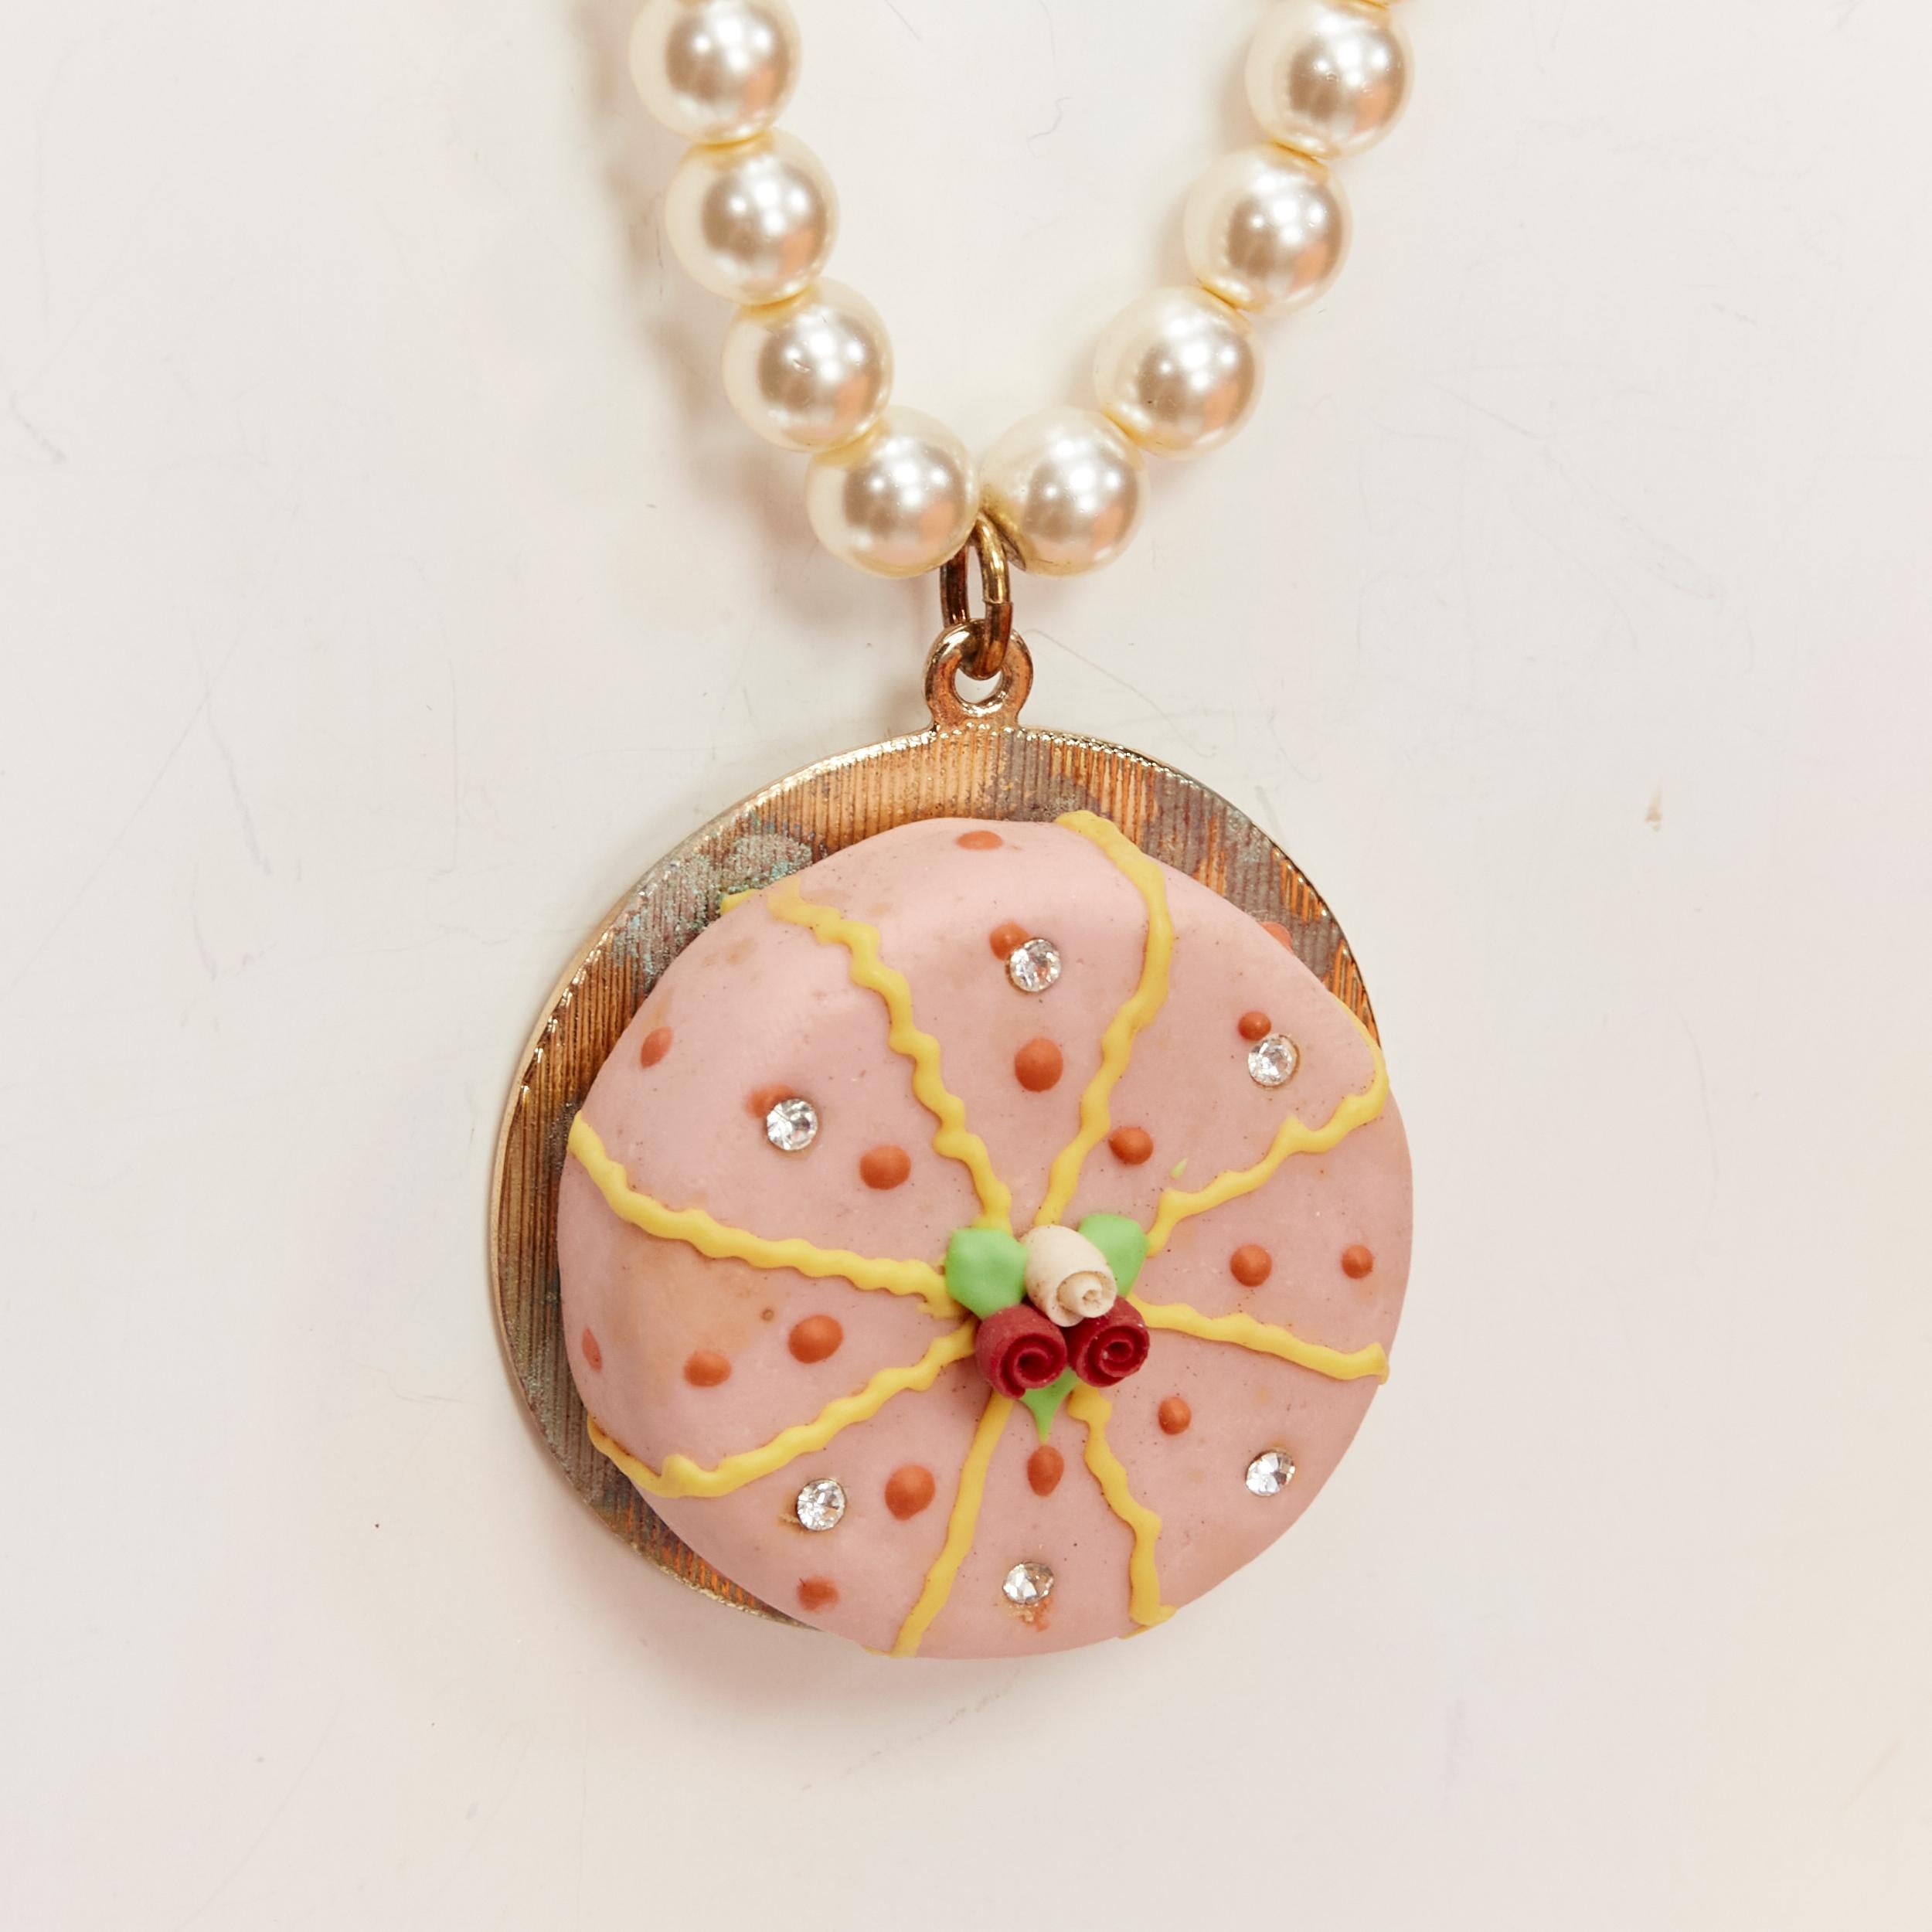 LE BIJOUX DE SOPHIE Hello Kitty pearl cake bow necklace For Sale 3